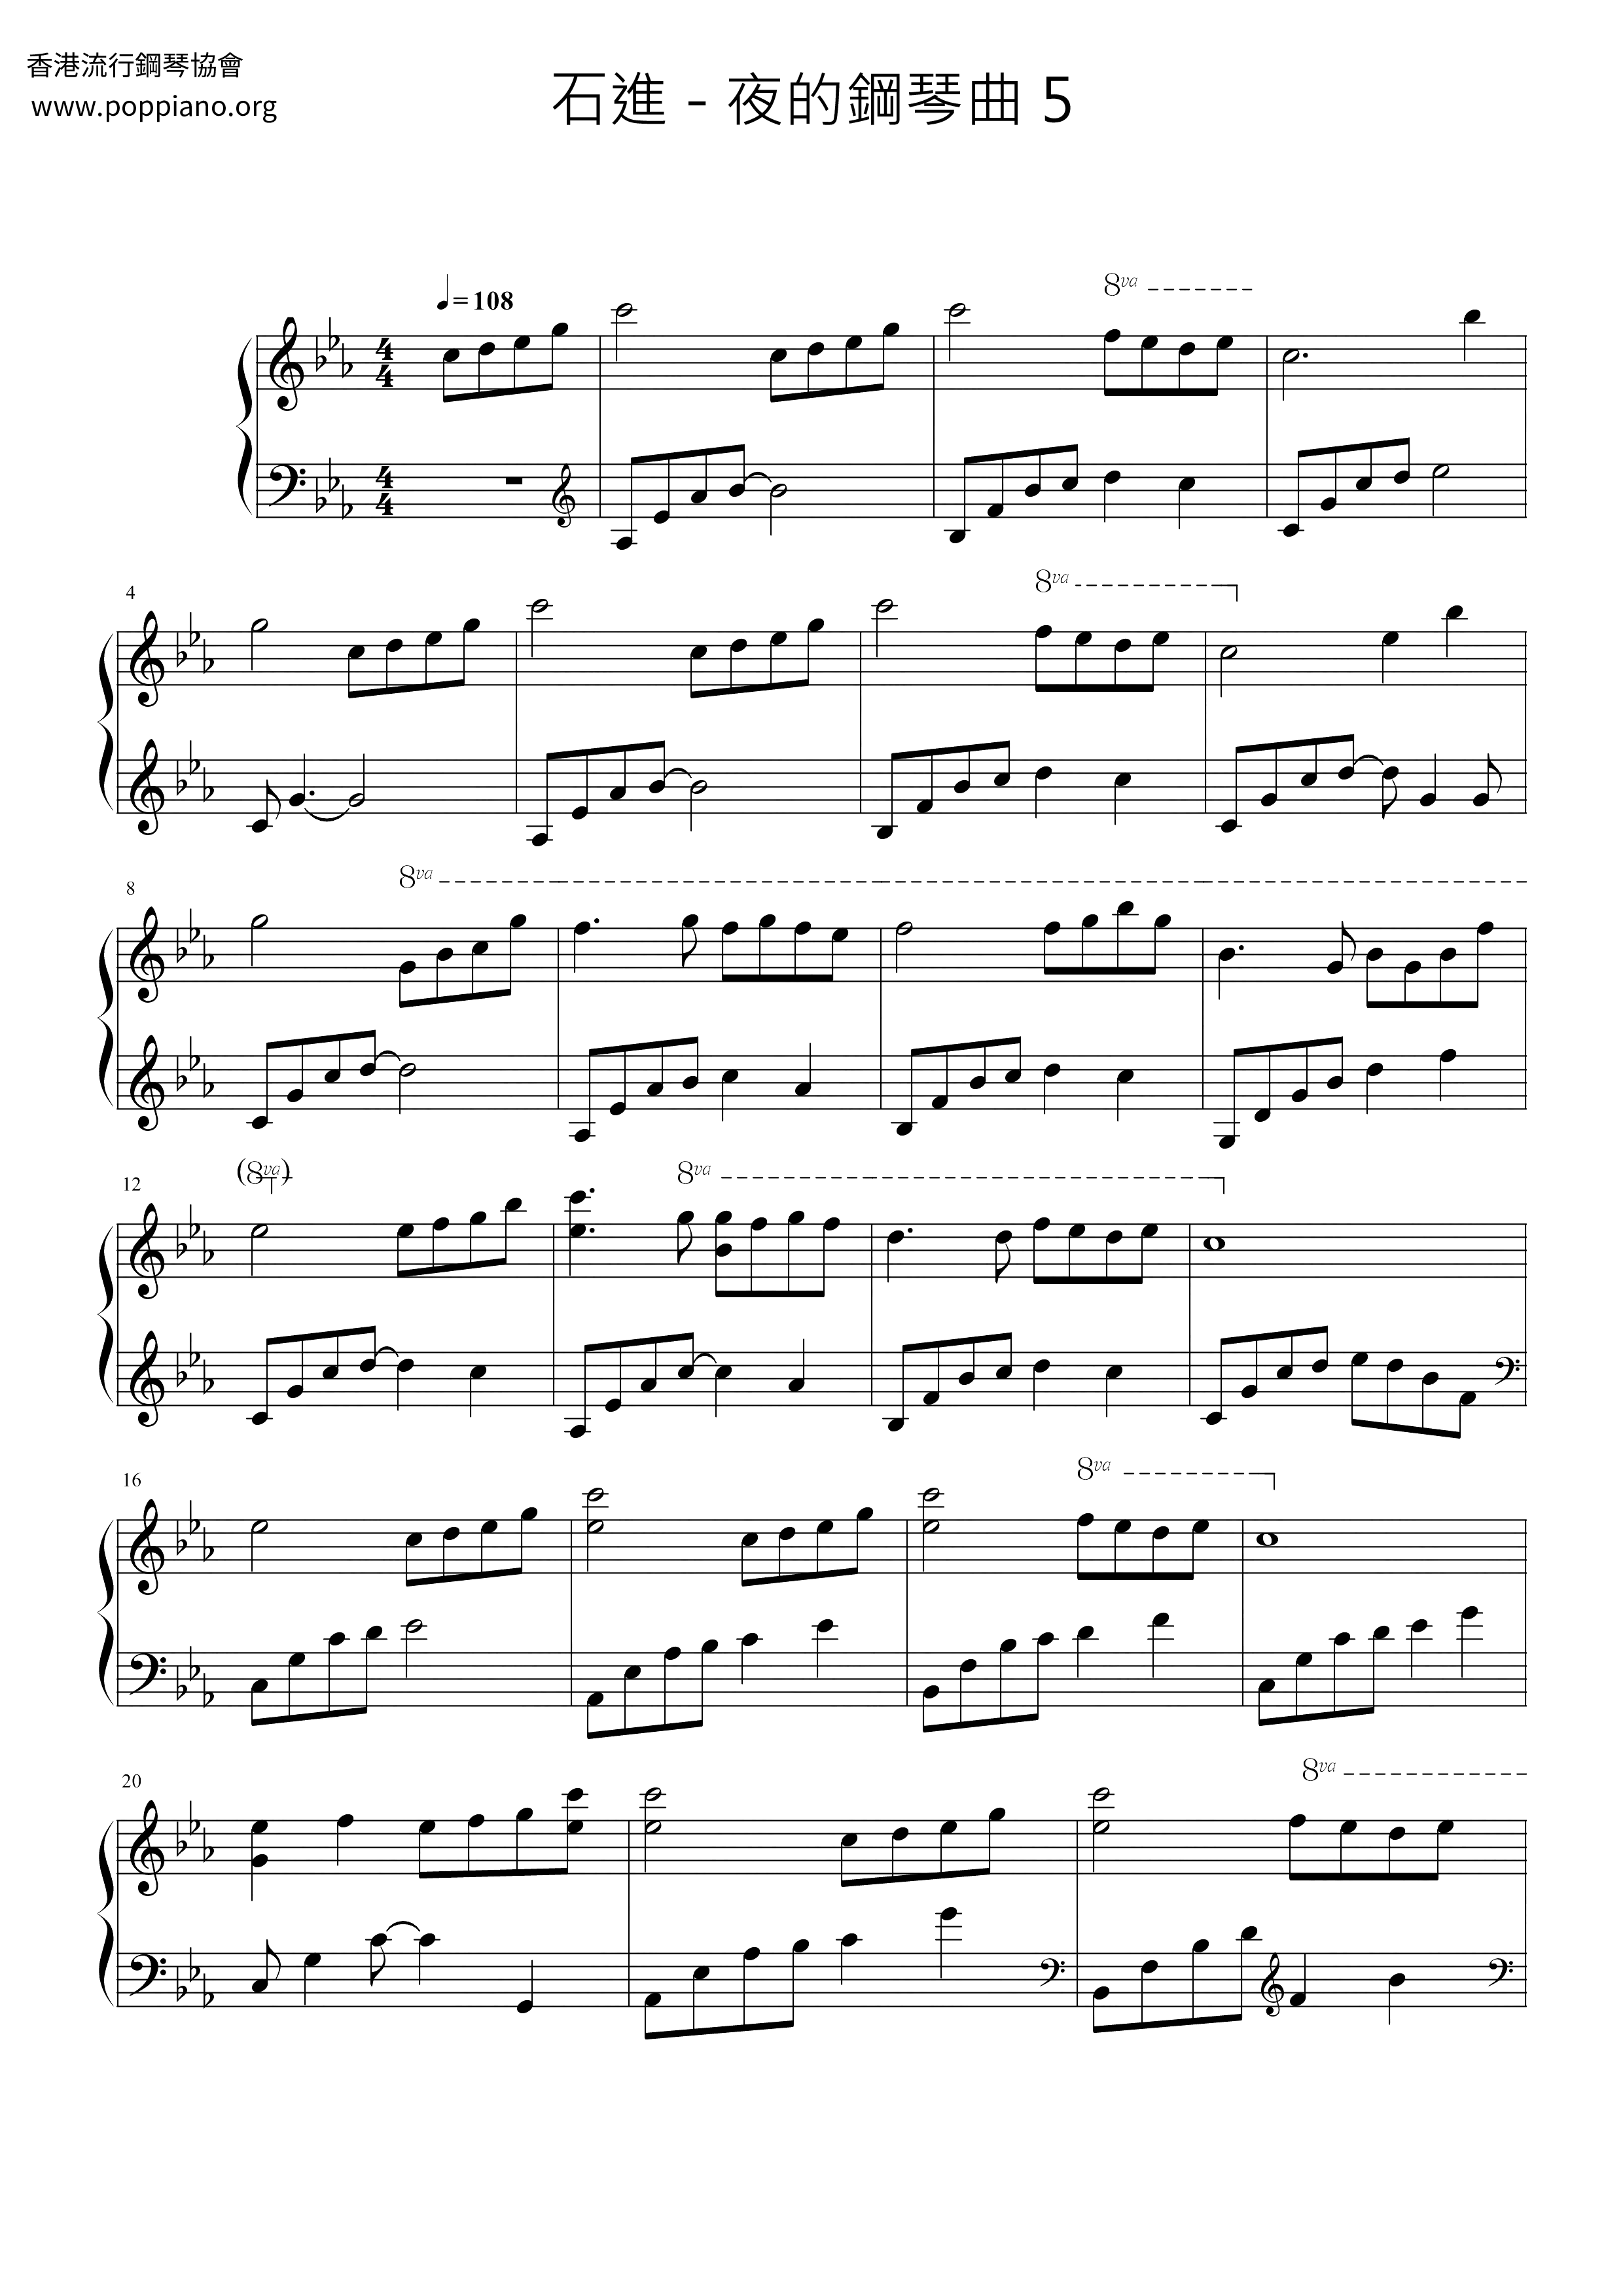 Melody Of The Night 5 Score